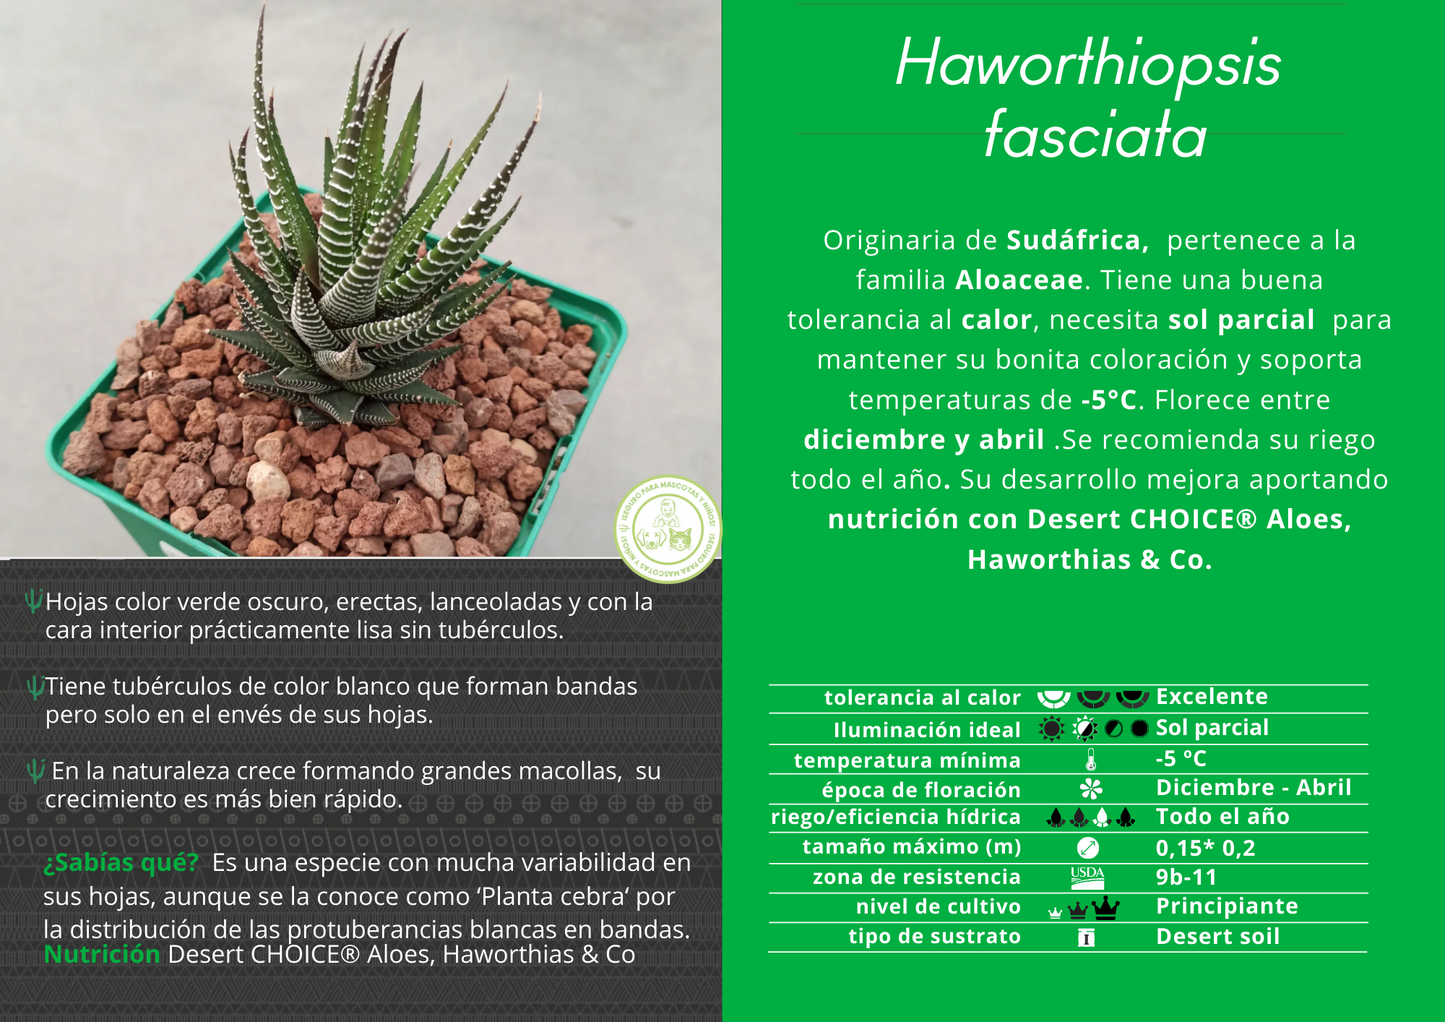 Haworthiopsis fasciata